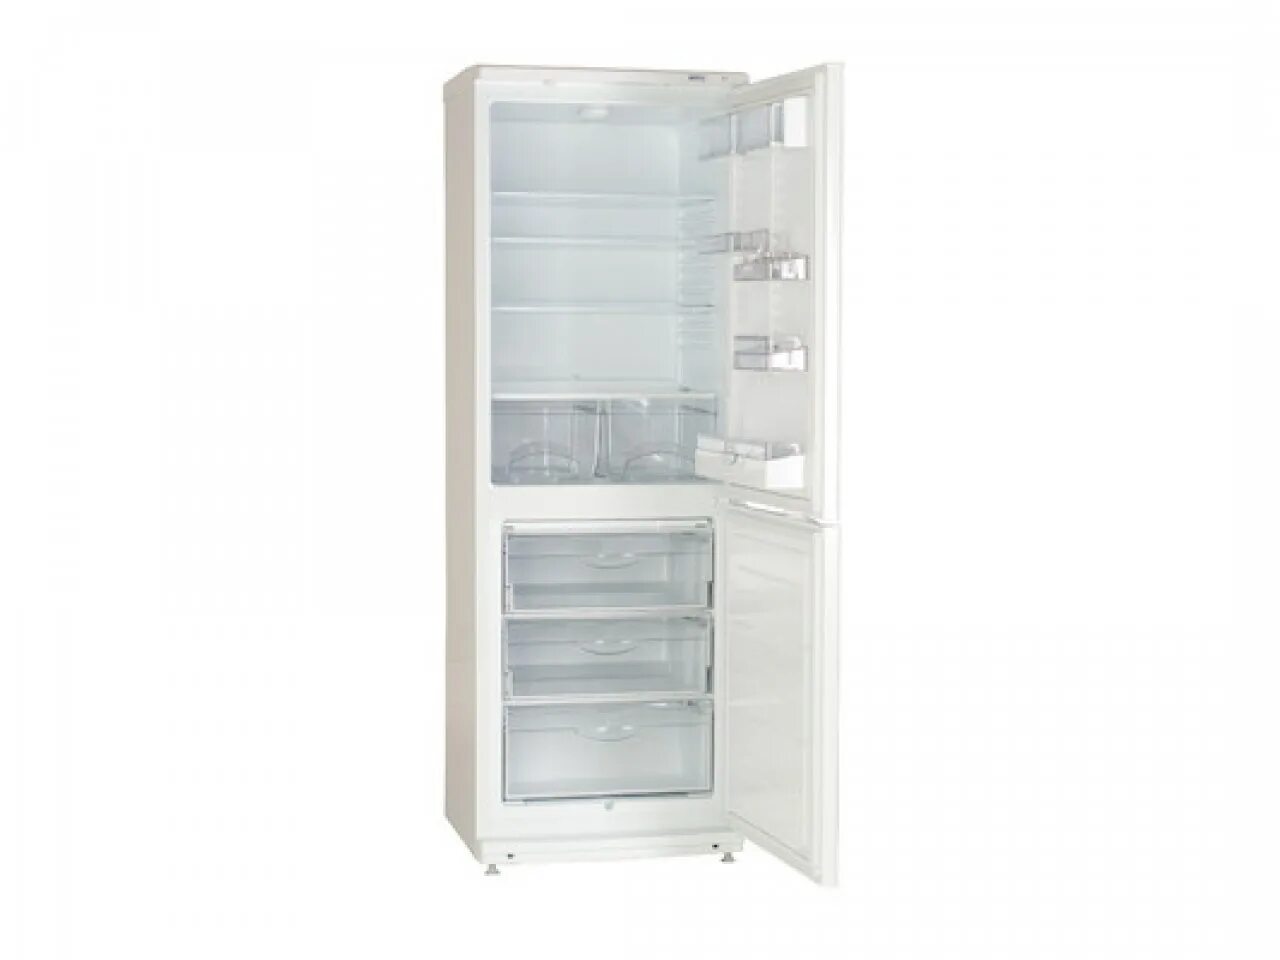 Холодильник Атлант 4012. Атлант хм 4012-022. Холодильник Атлант хм 4012-022. Атлант XM 4012-022.